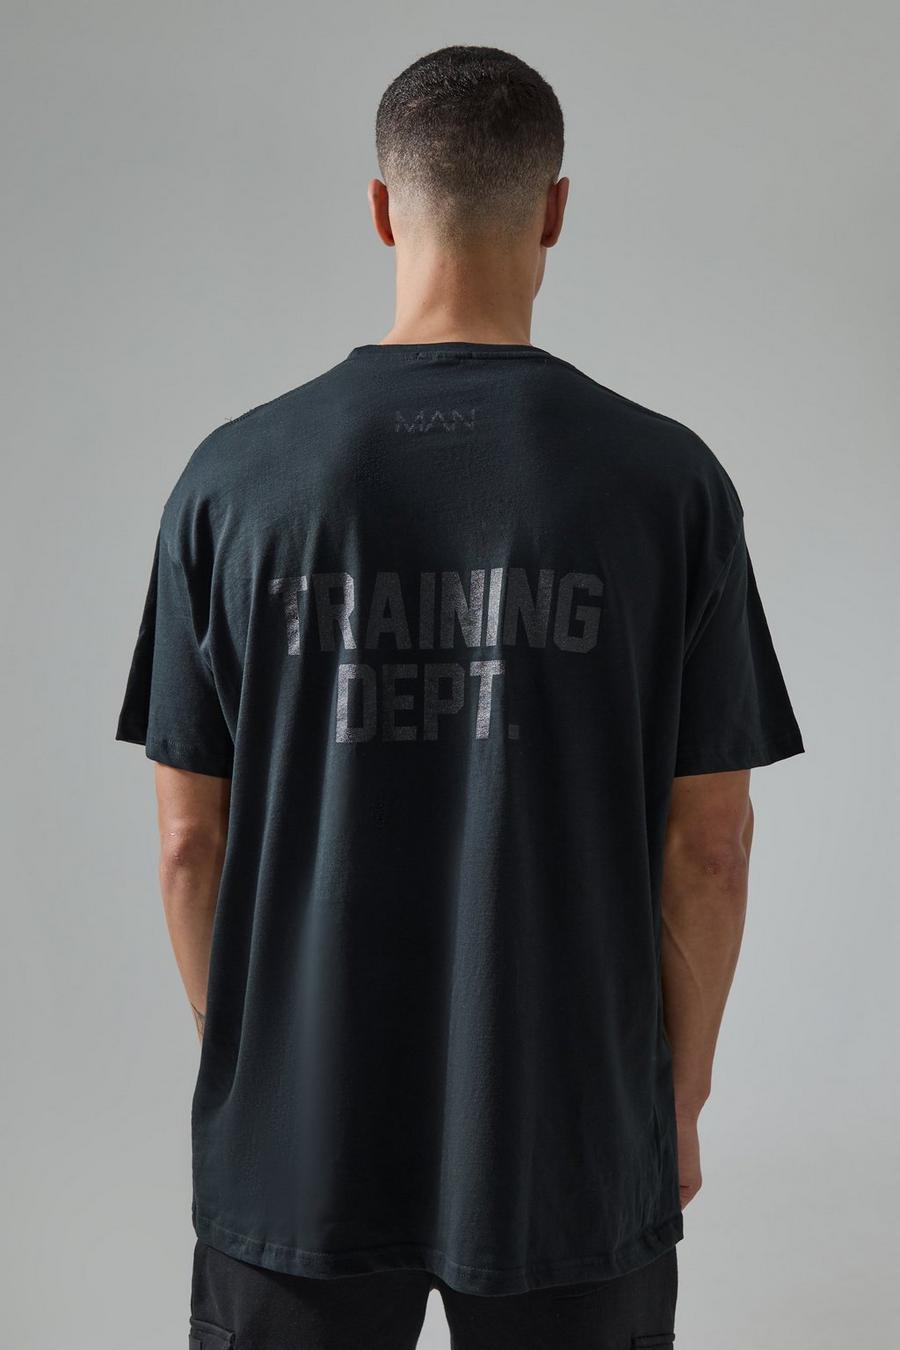 Black Oversized Active Training Dept T-Shirt